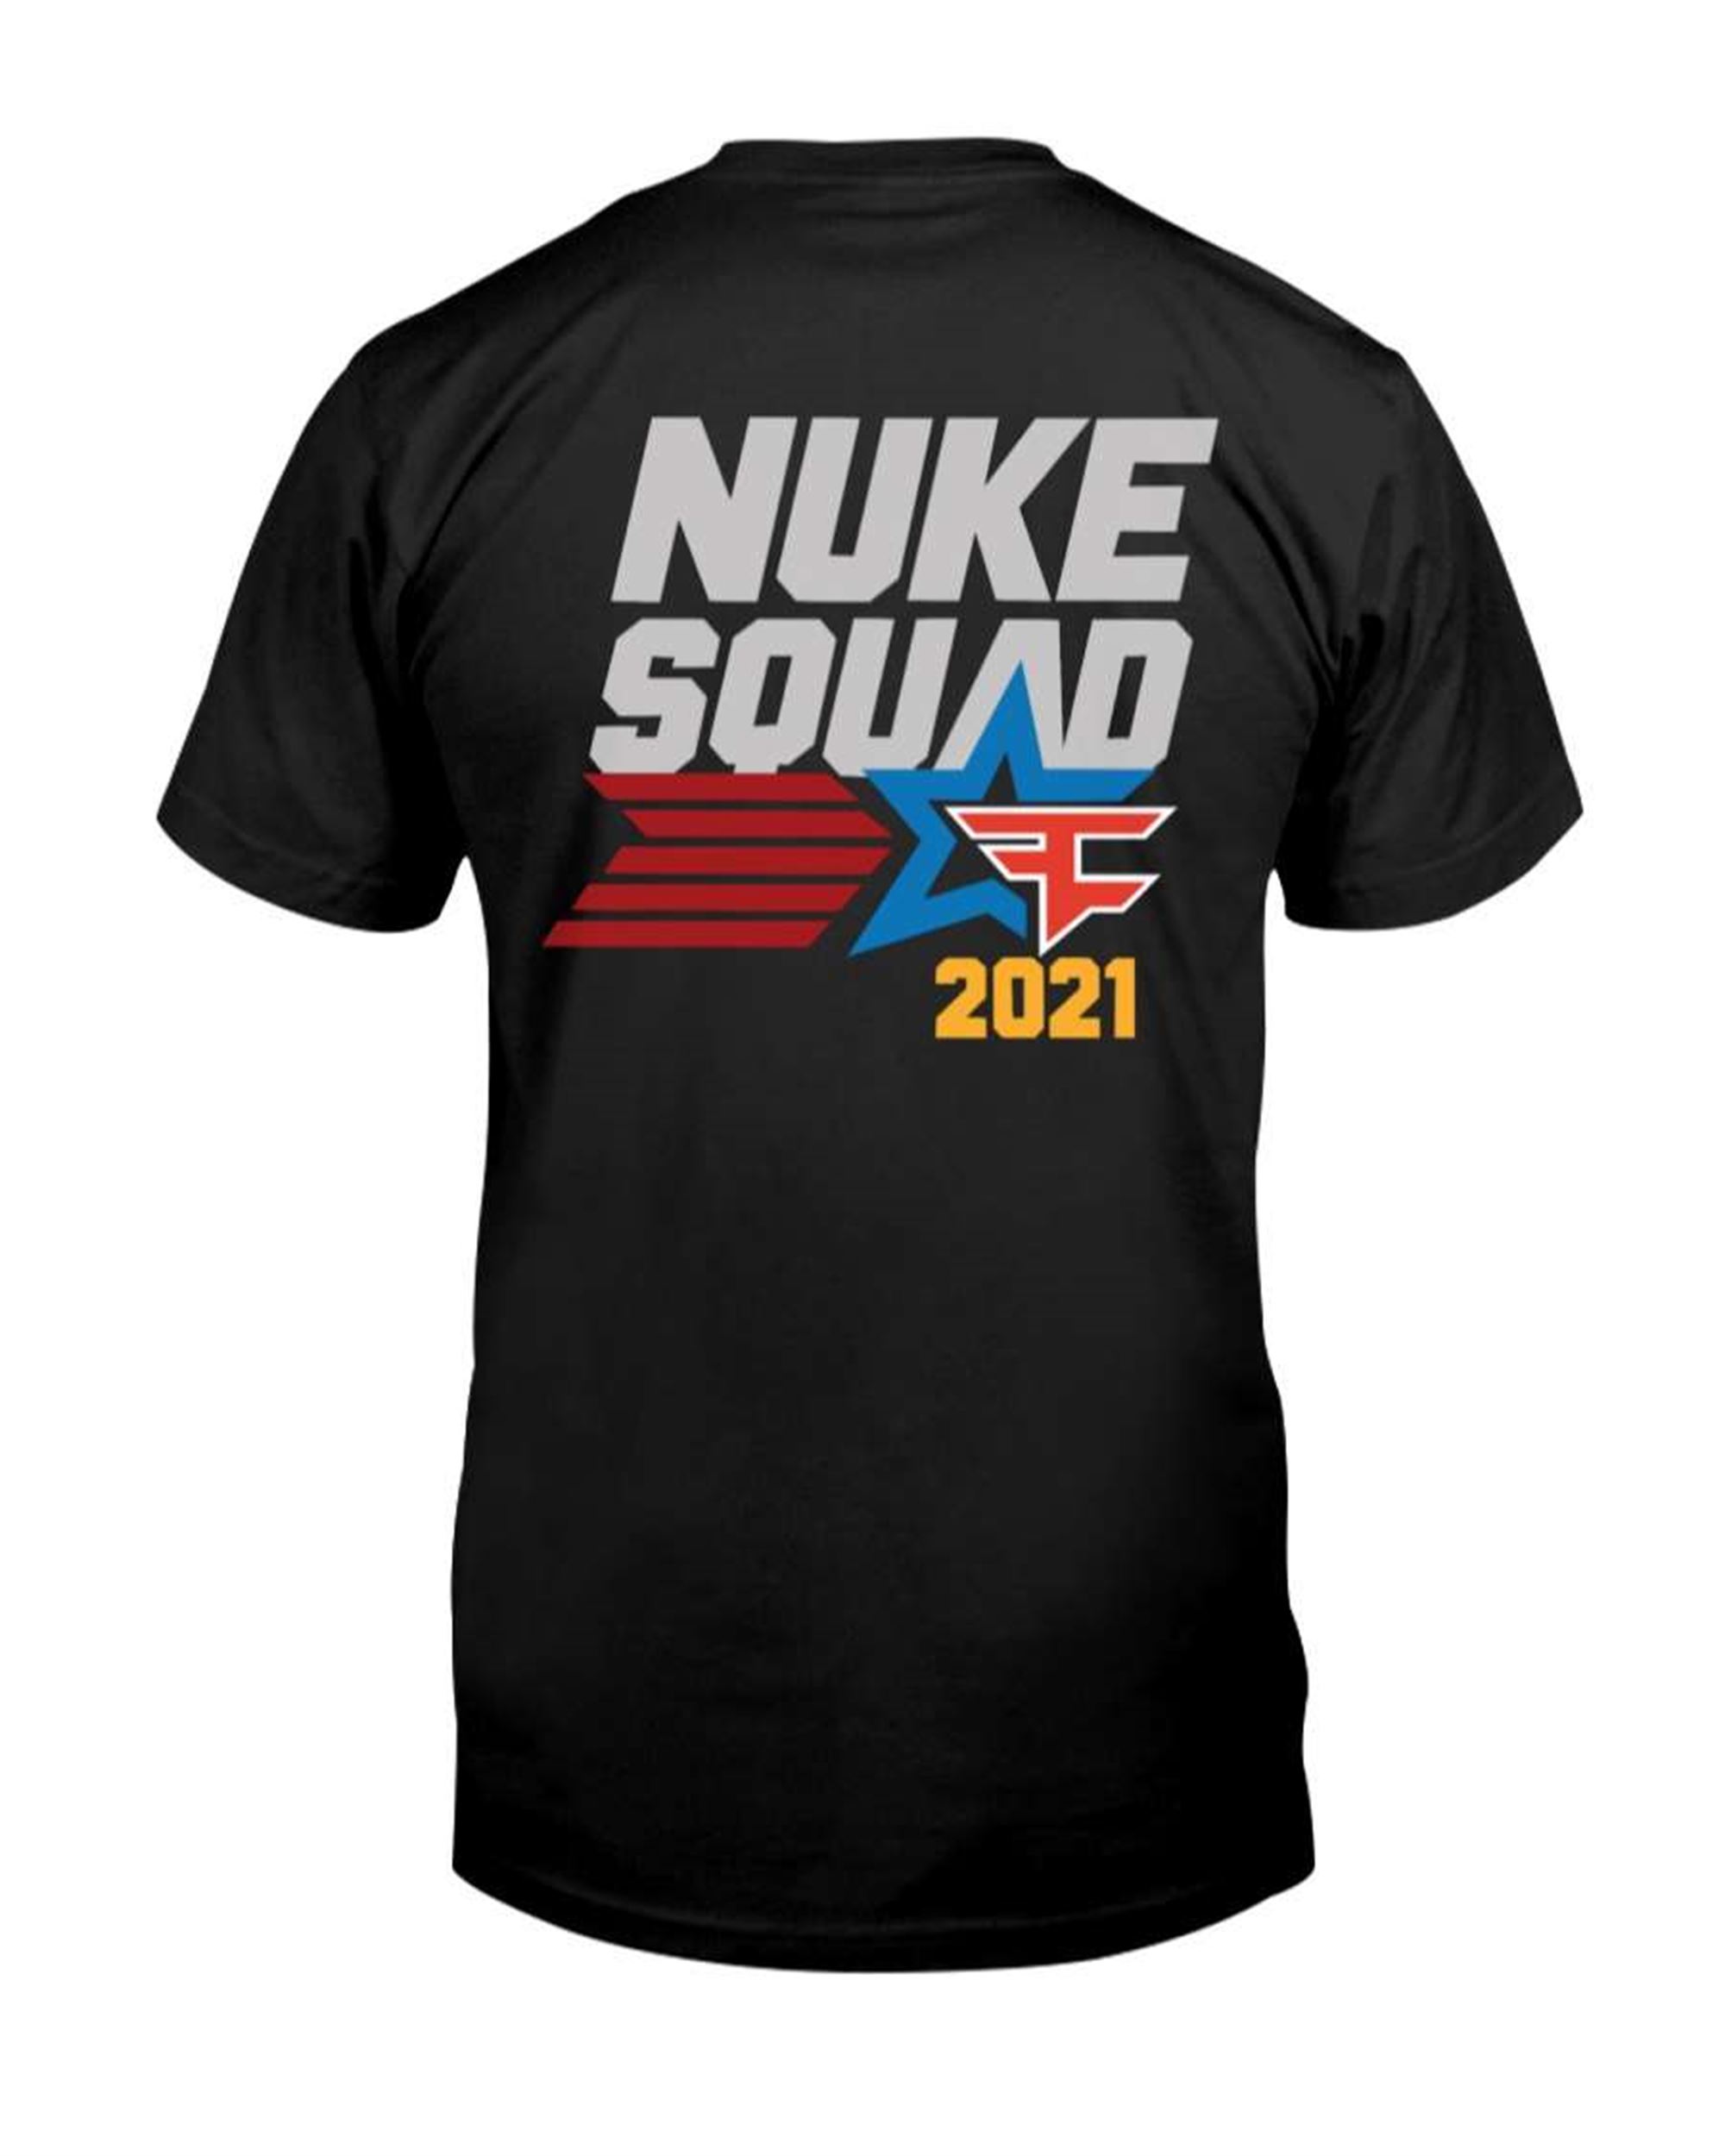 Nuke Squad Merch Hooded Sweatshirt T-shirt Full Size Up To 5xl